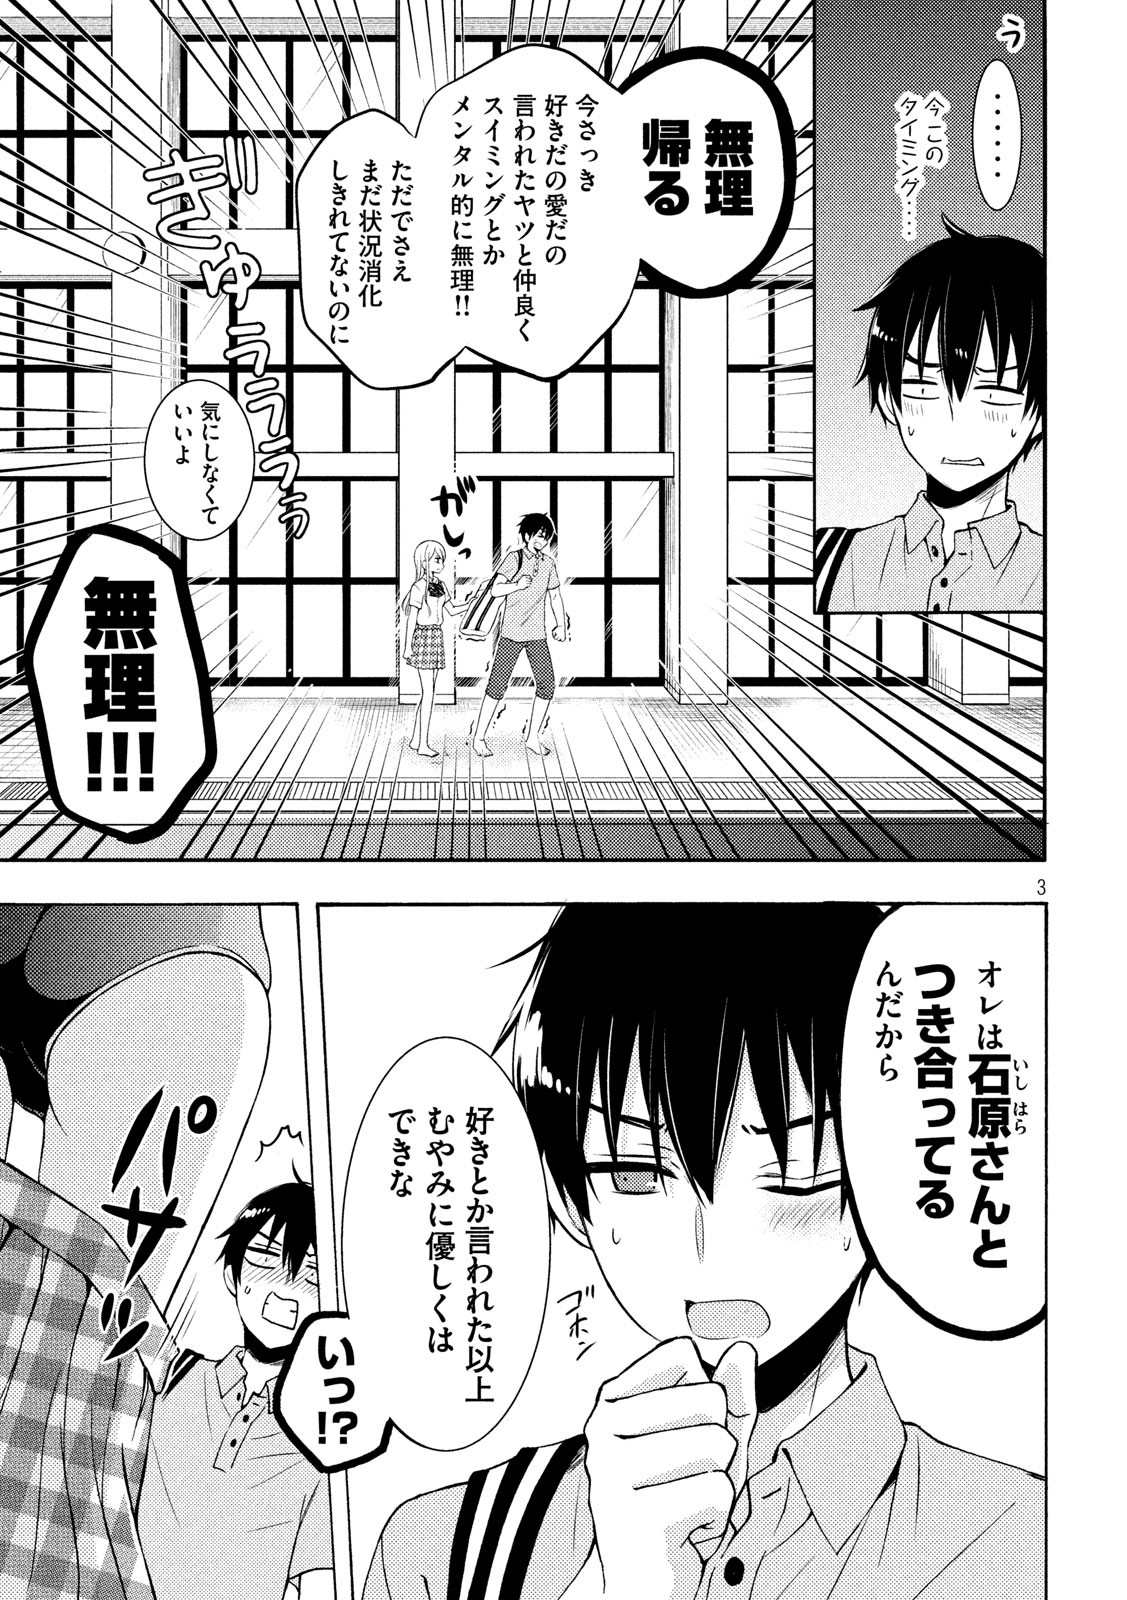 Watari-kun no xx ga Houkai Sunzen - Chapter 50 - Page 3